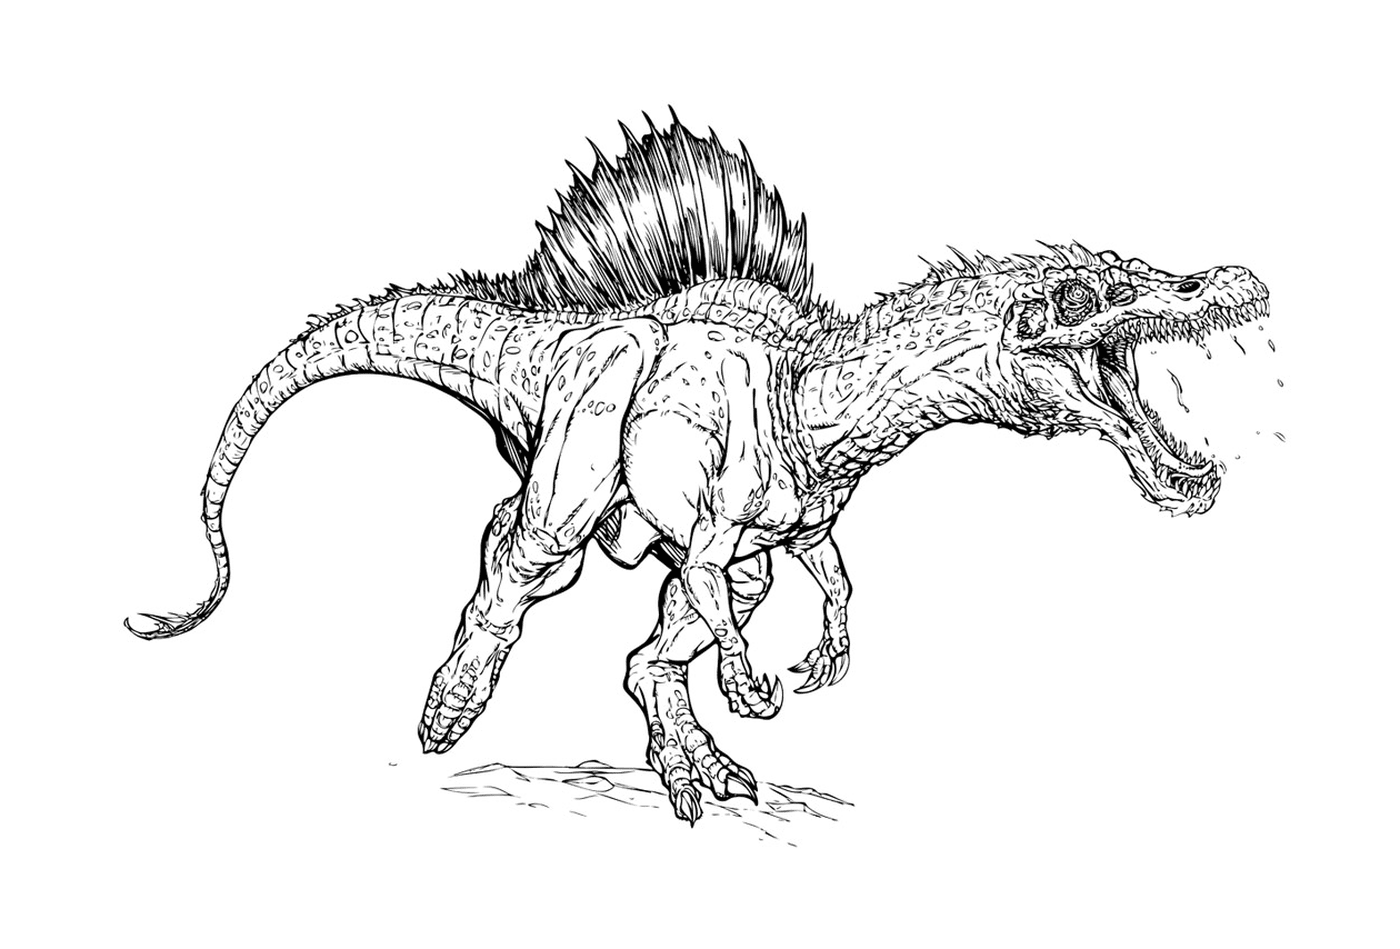   Spinosaurus féroce et menaçant 